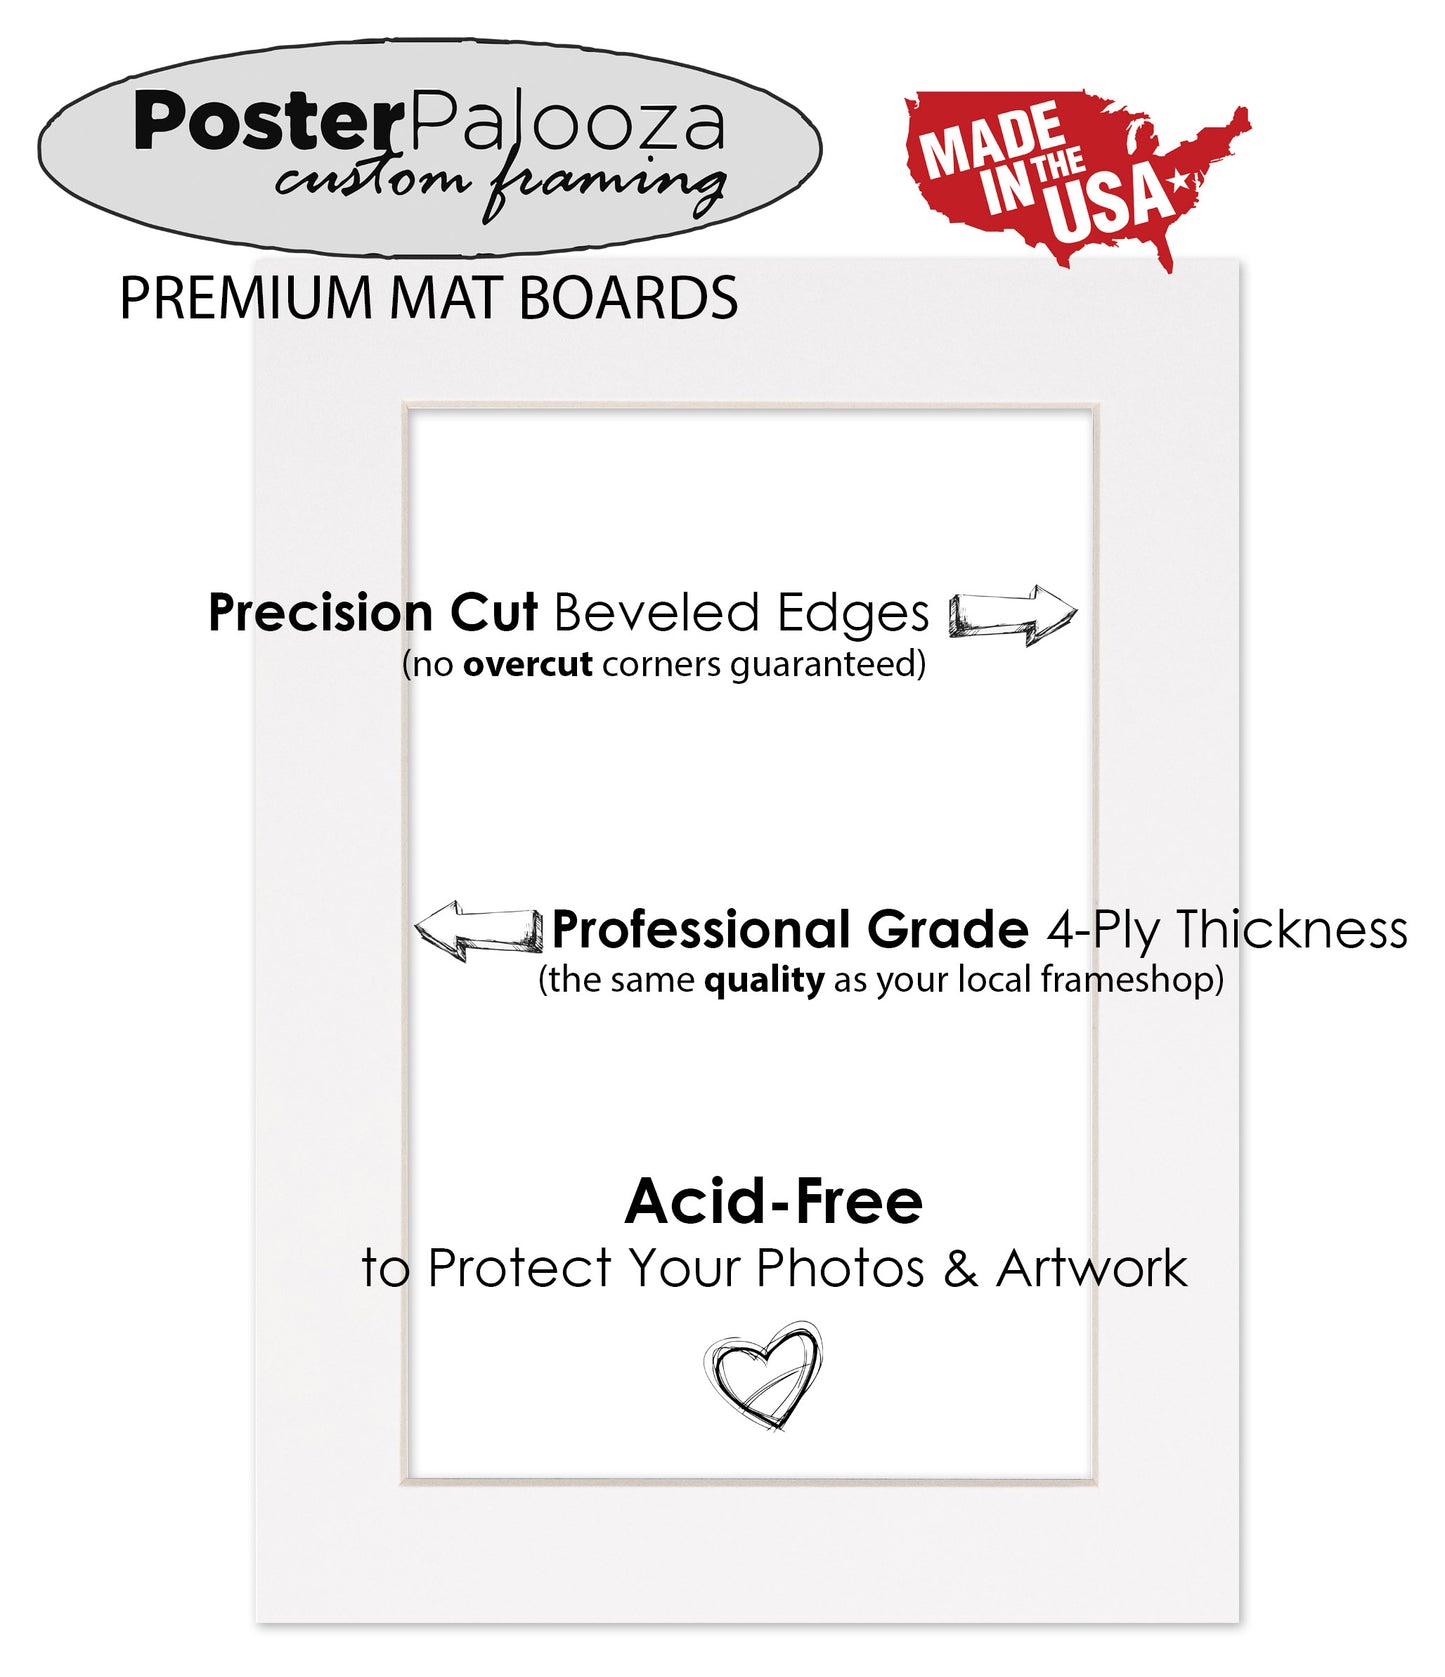 Pack of 10 Maroon Precut Acid-Free Matboards